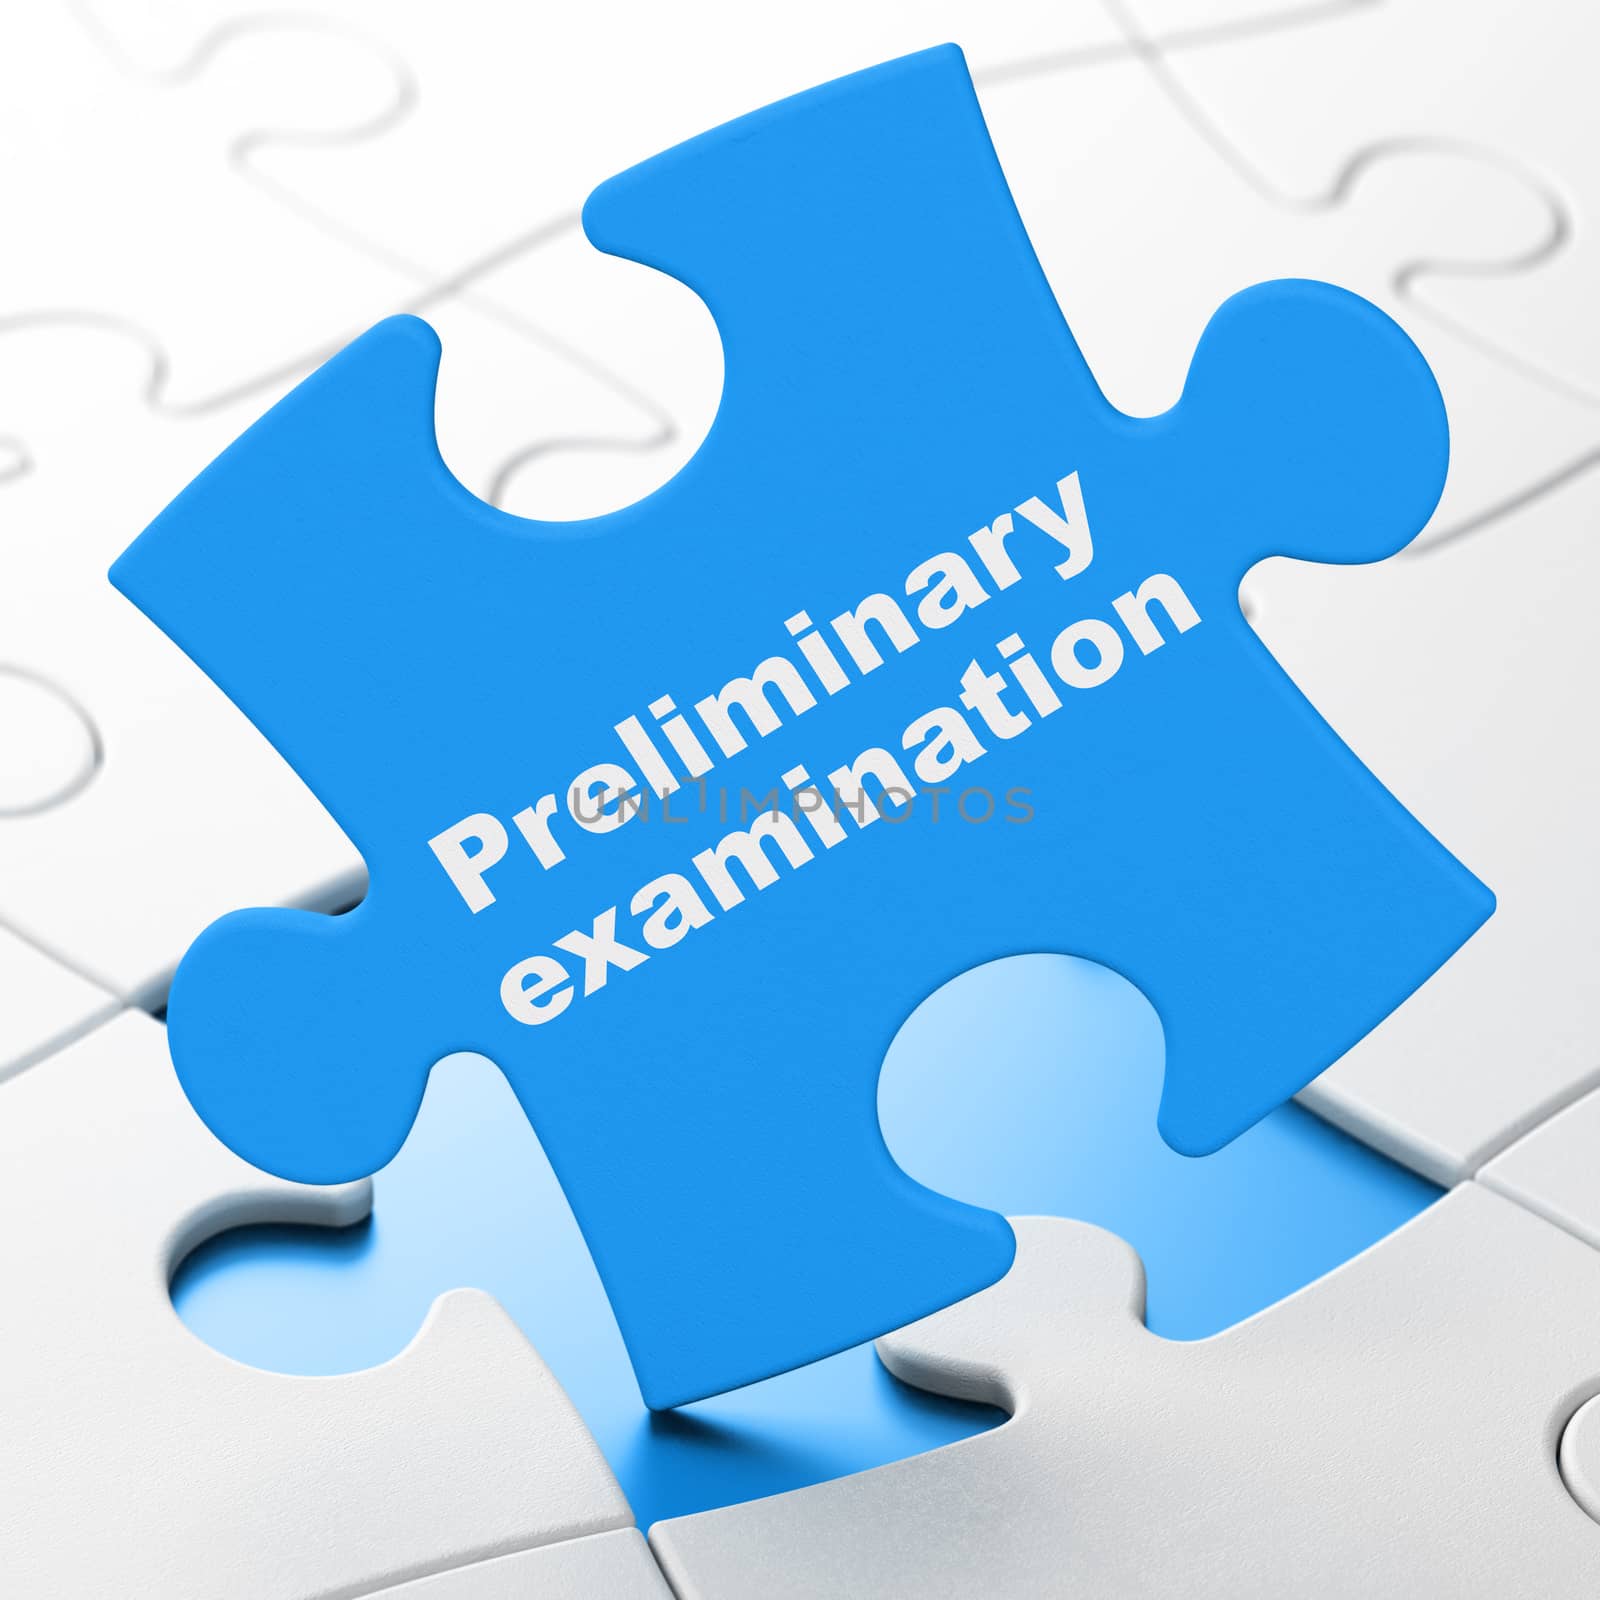 Education concept: Preliminary Examination on puzzle background by maxkabakov